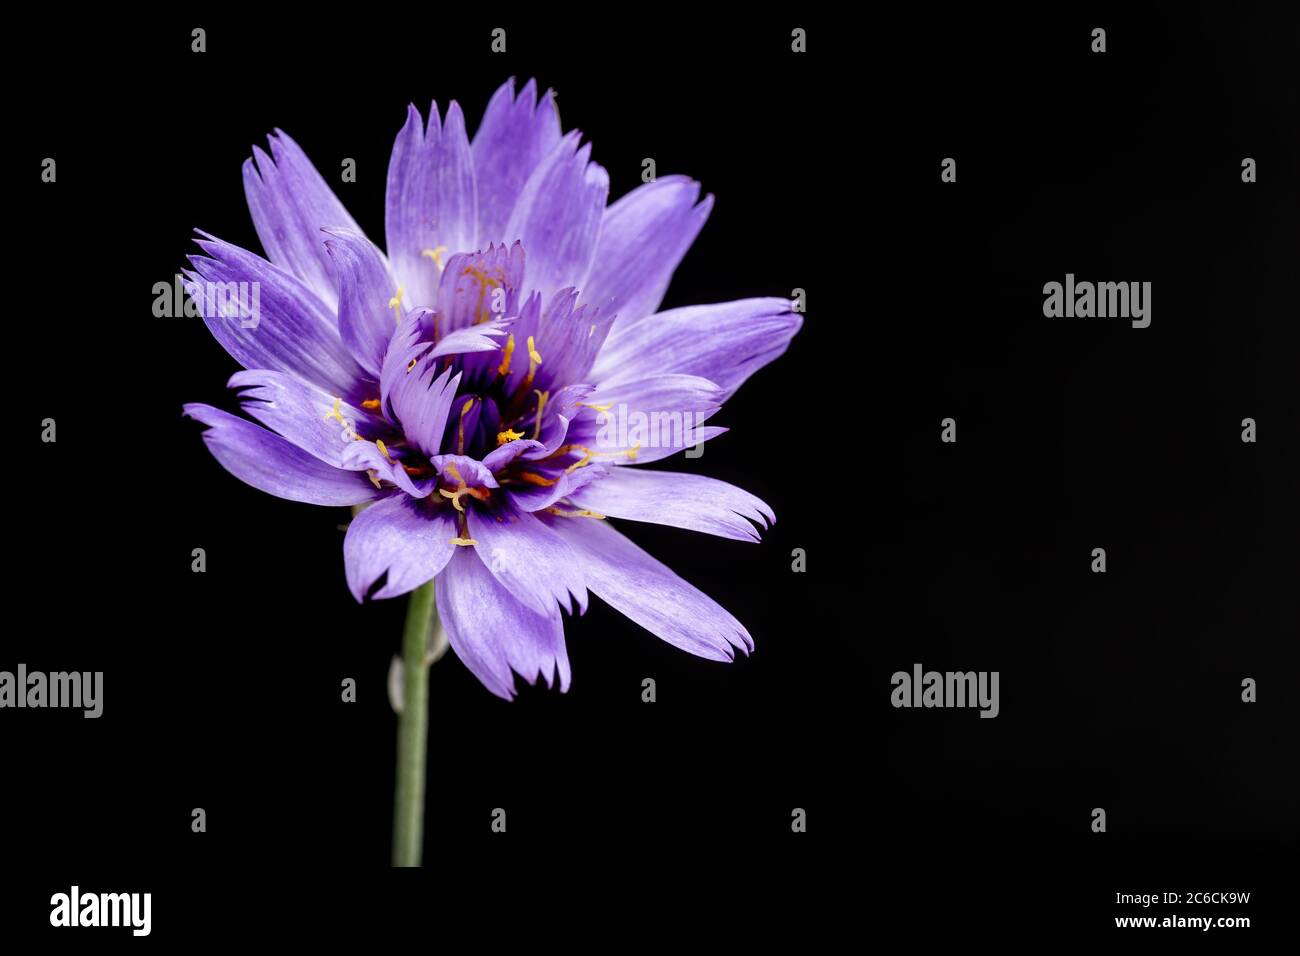 Cupid's Dart, Catananche caerulea Flower on Black Background Stock Photo